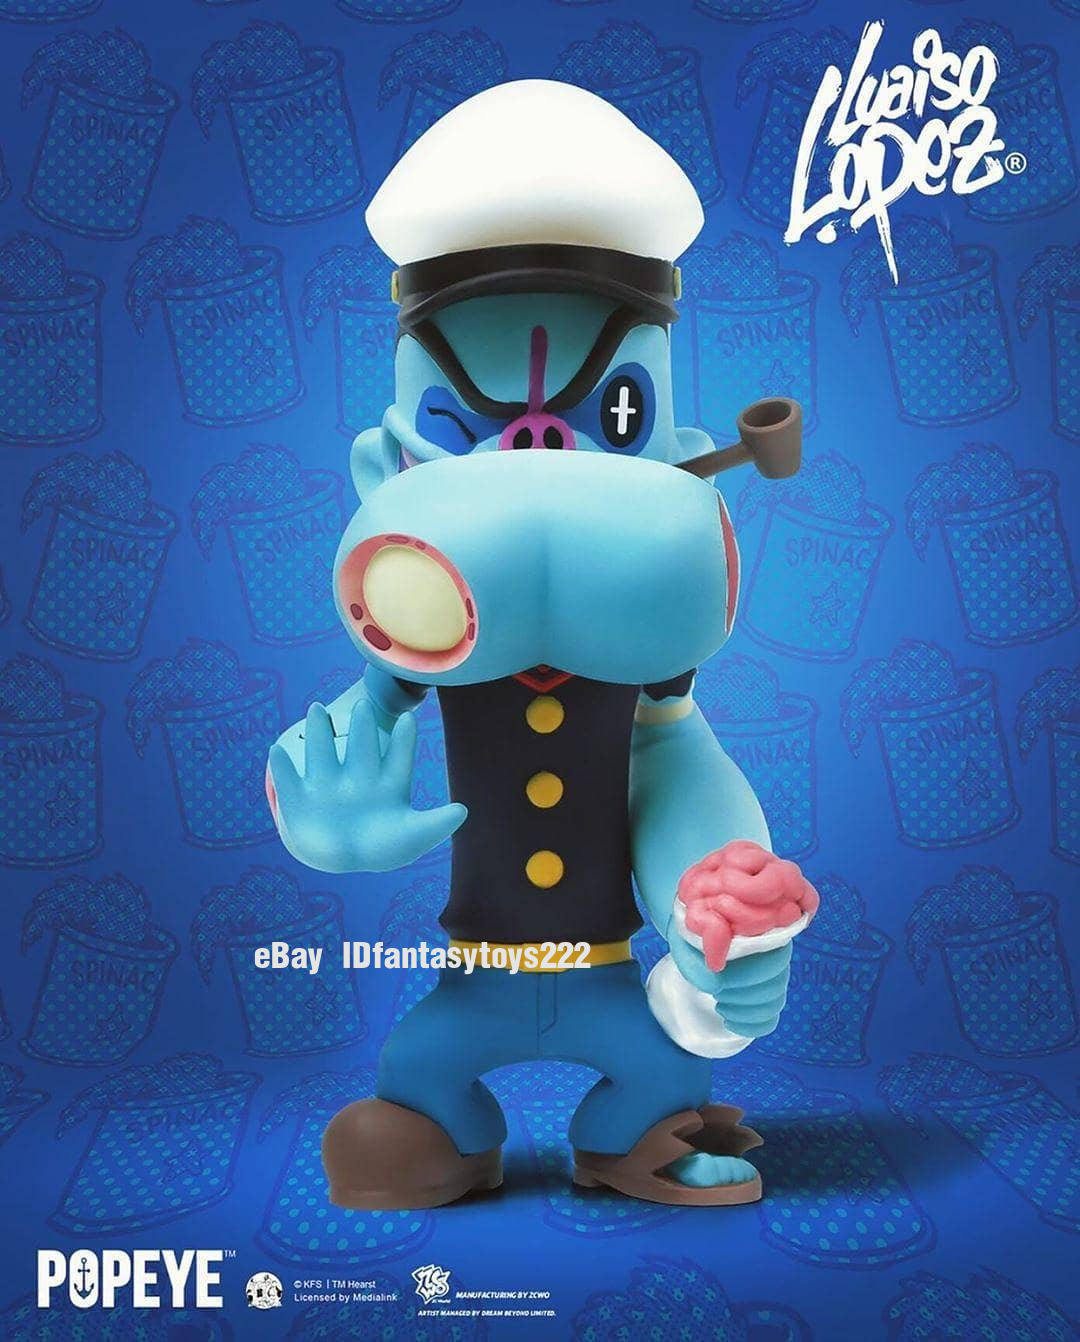 ZCWO X Luaiso Loprz Zombie Popeye 90th Anniversary Collectibles Model instock